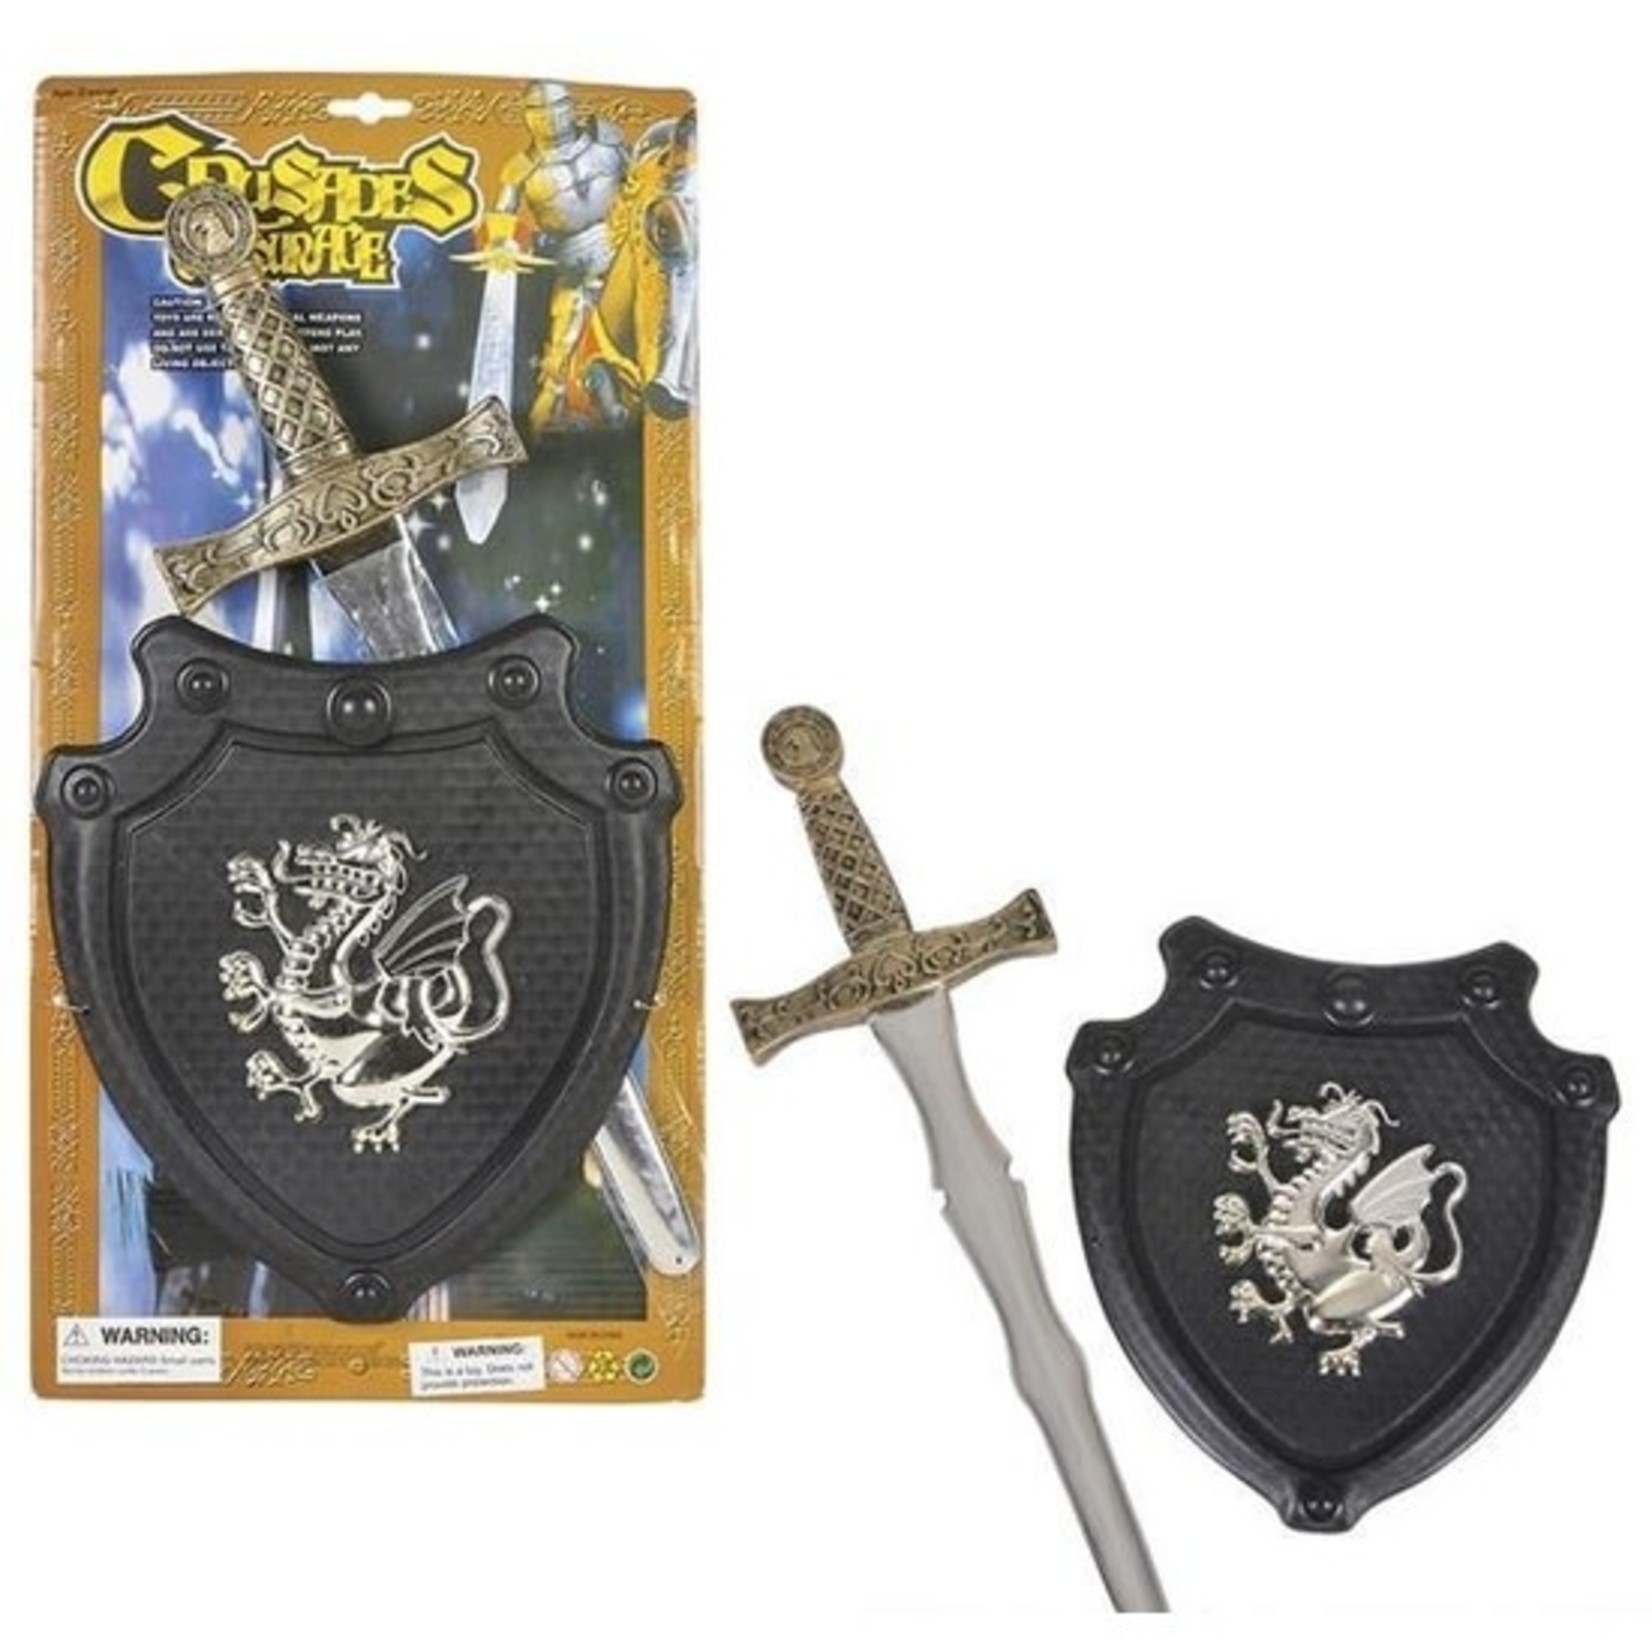 Crusades Sword and Shield 2 Piece Set